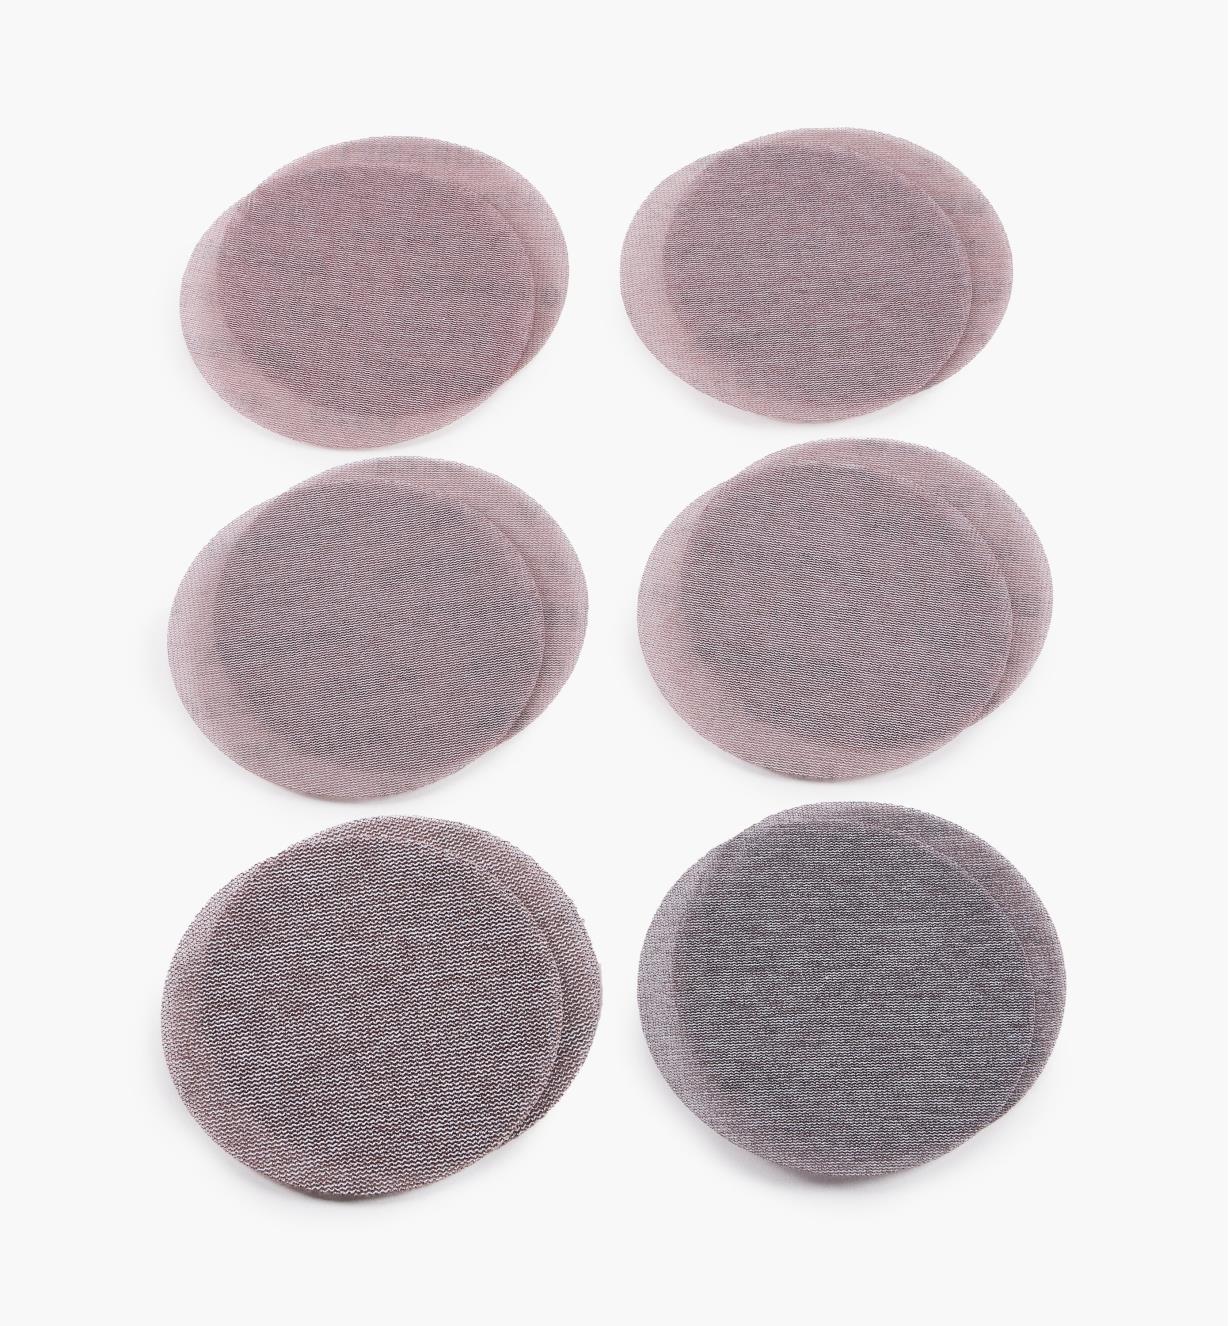 08K1815 - 12-Pc. Sample Pack of Mirka 6" Abranet Grip Discs